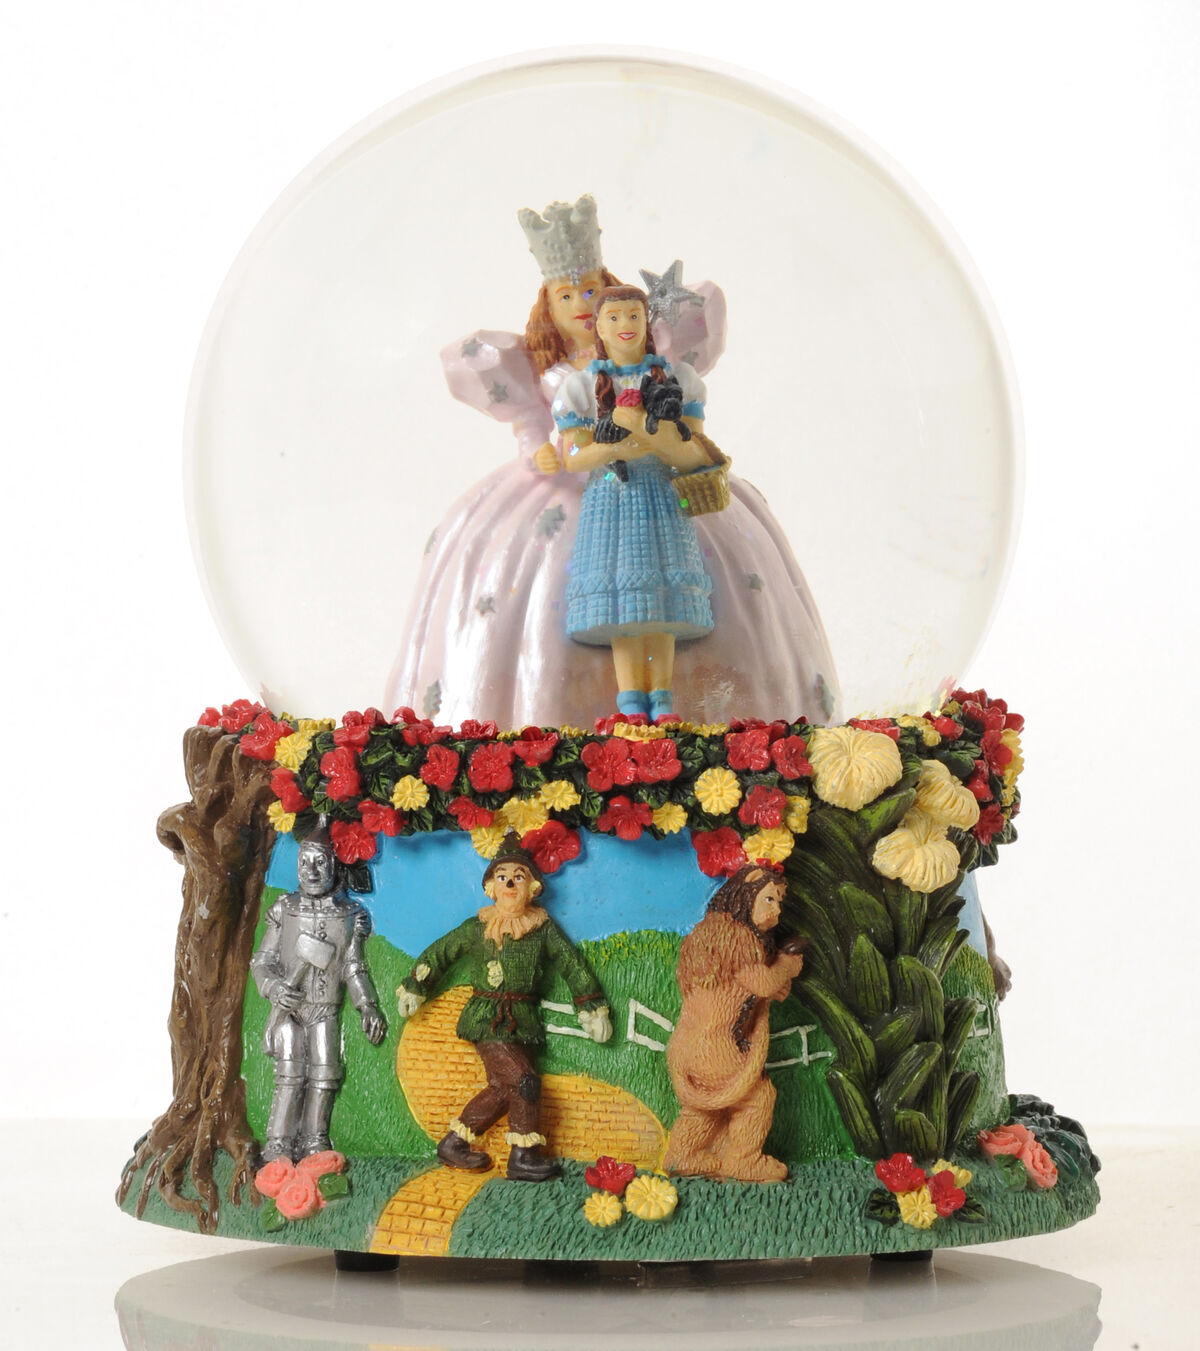 The Wizard of Oz decorative globe